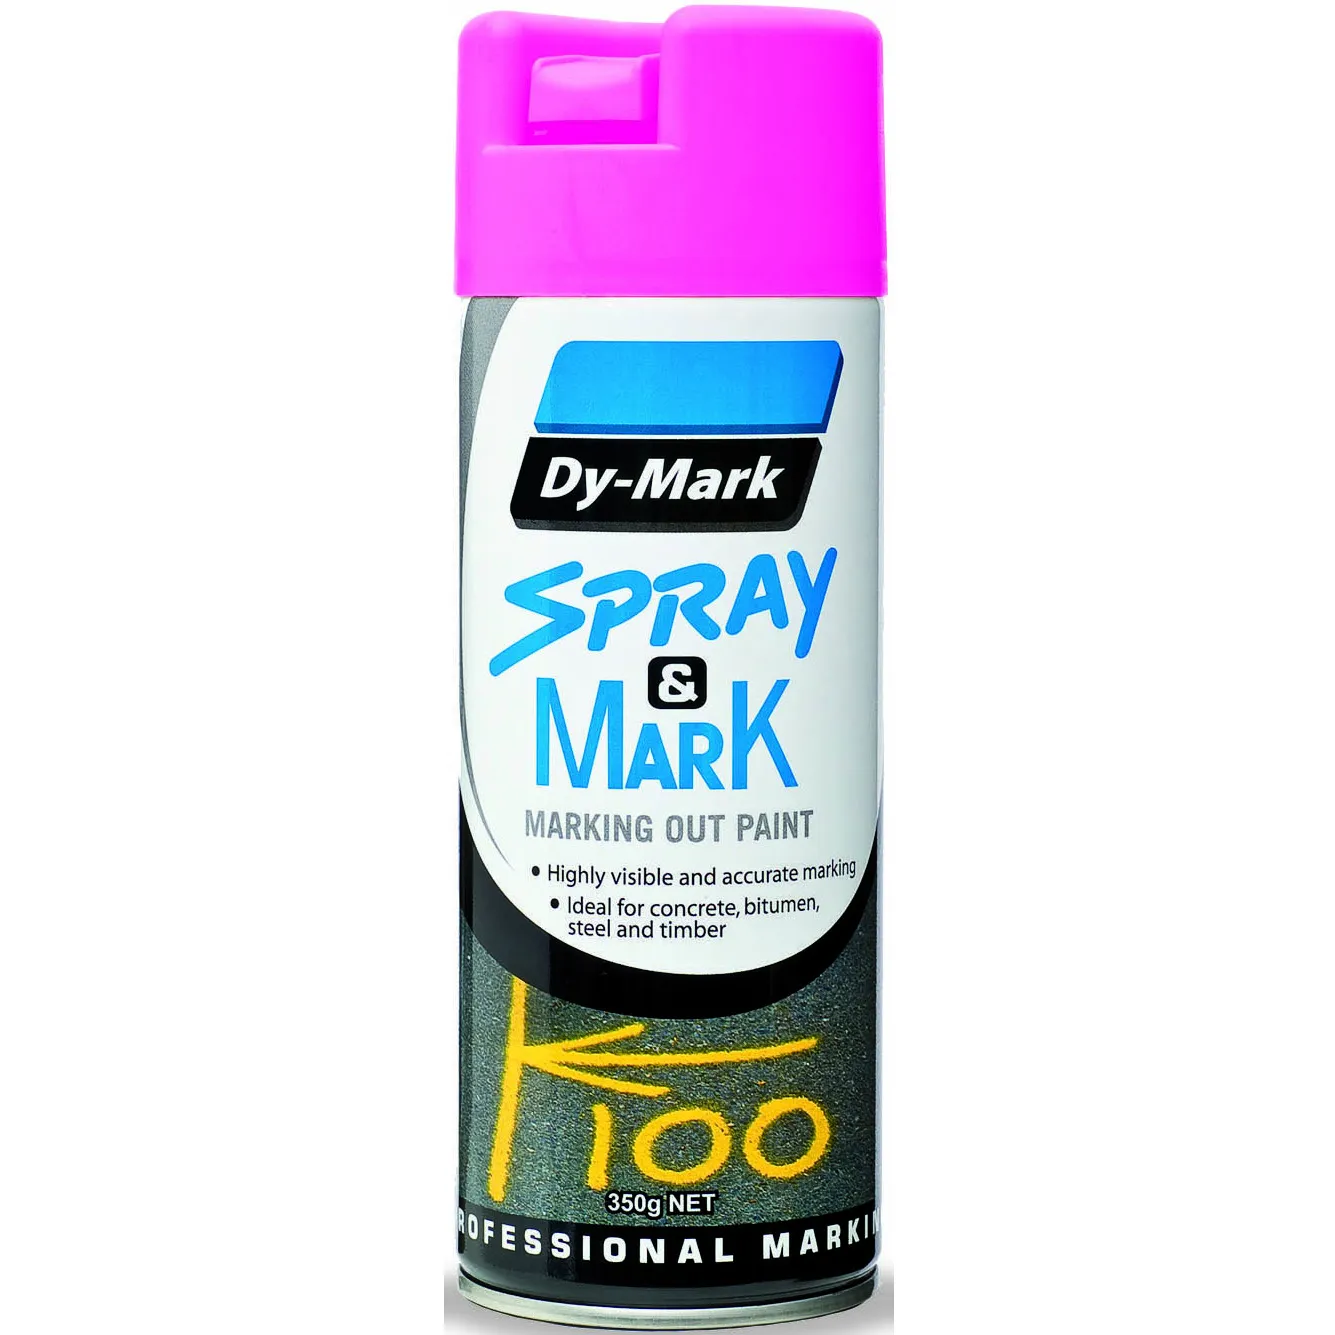 Dy-Mark Spray & Mark Paint 350g - Fluro Pink